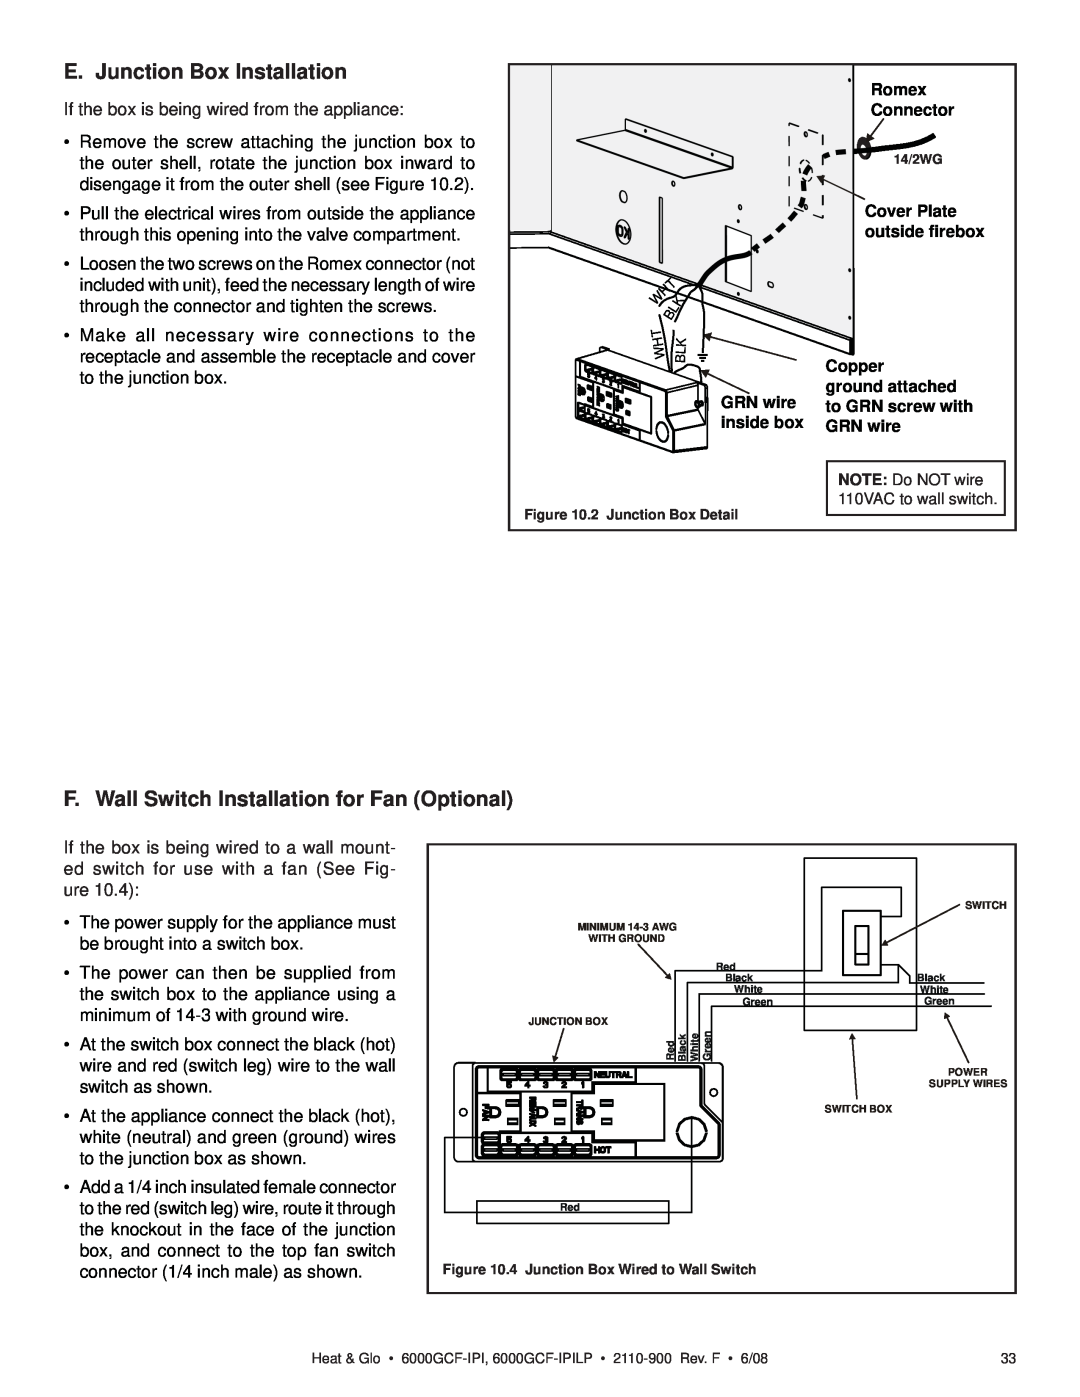 Heat & Glo LifeStyle 6000GCF-IPI E. Junction Box Installation, F. Wall Switch Installation for Fan Optional, Romex, Copper 